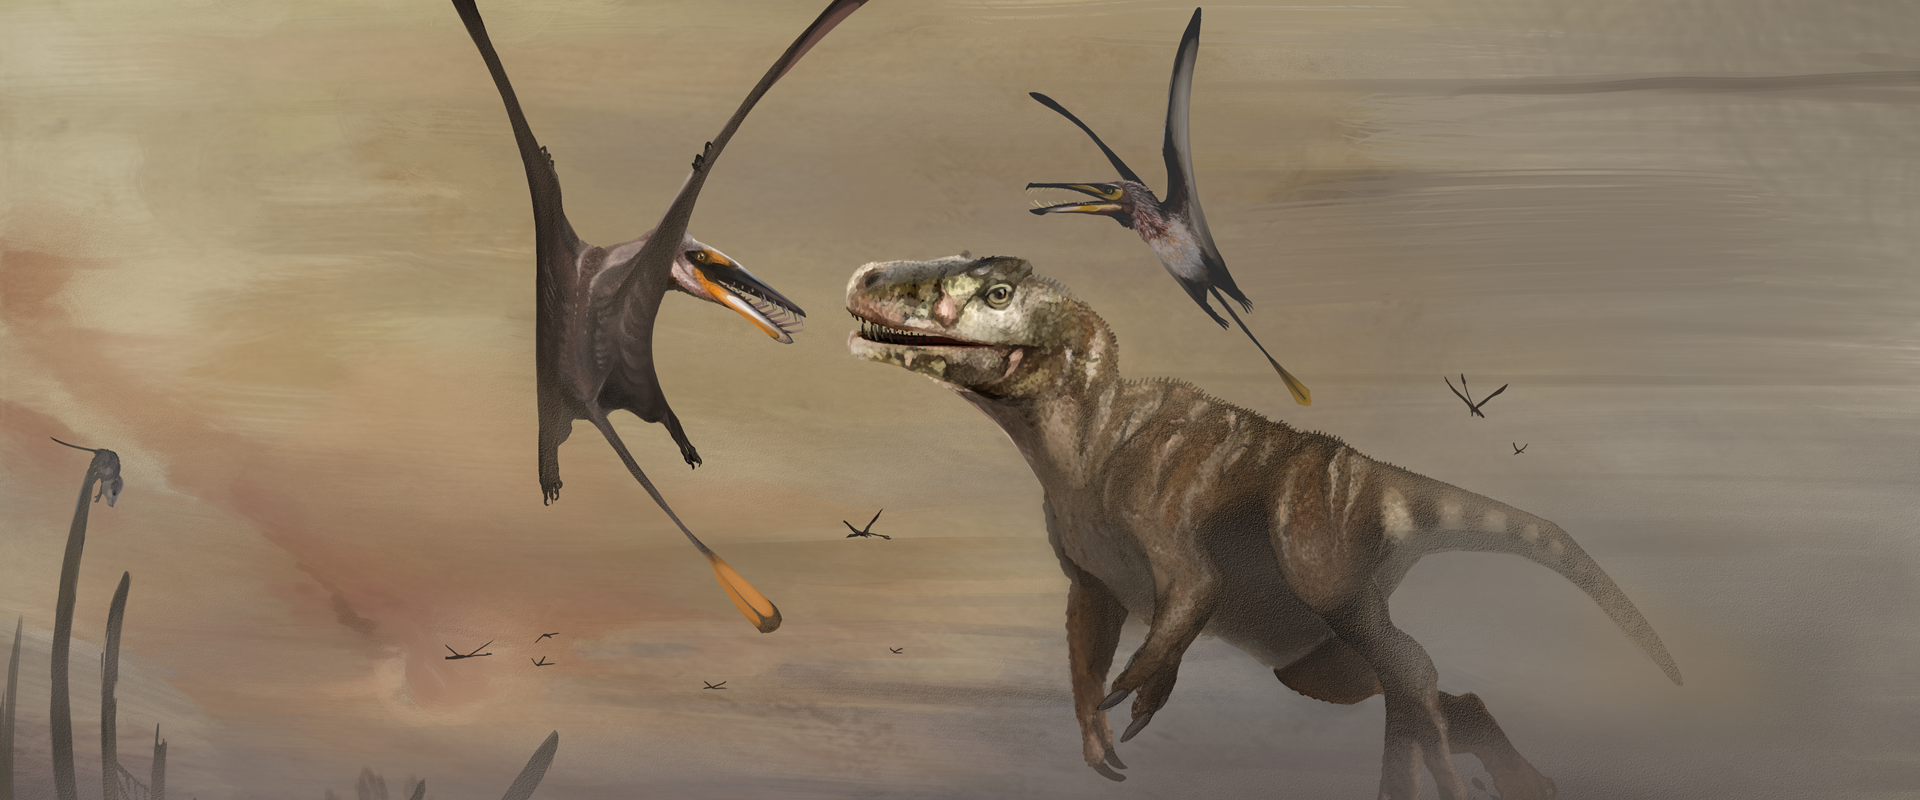 Skye high: Jurassic pterosaur discovery